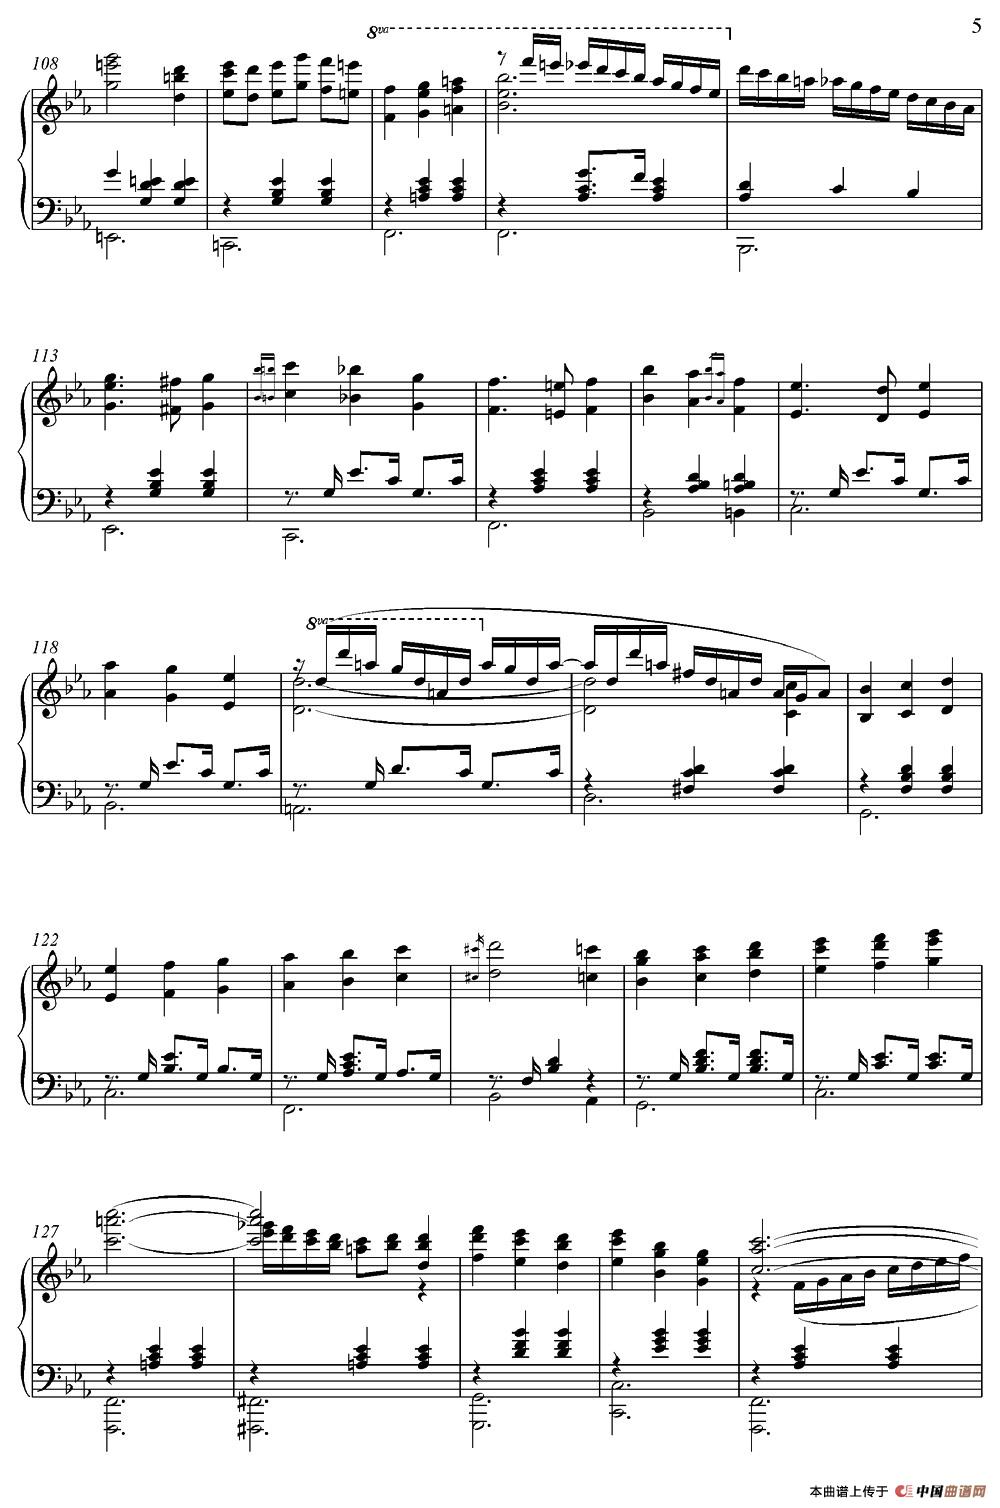 《Legend Of 1900》钢琴曲谱图分享